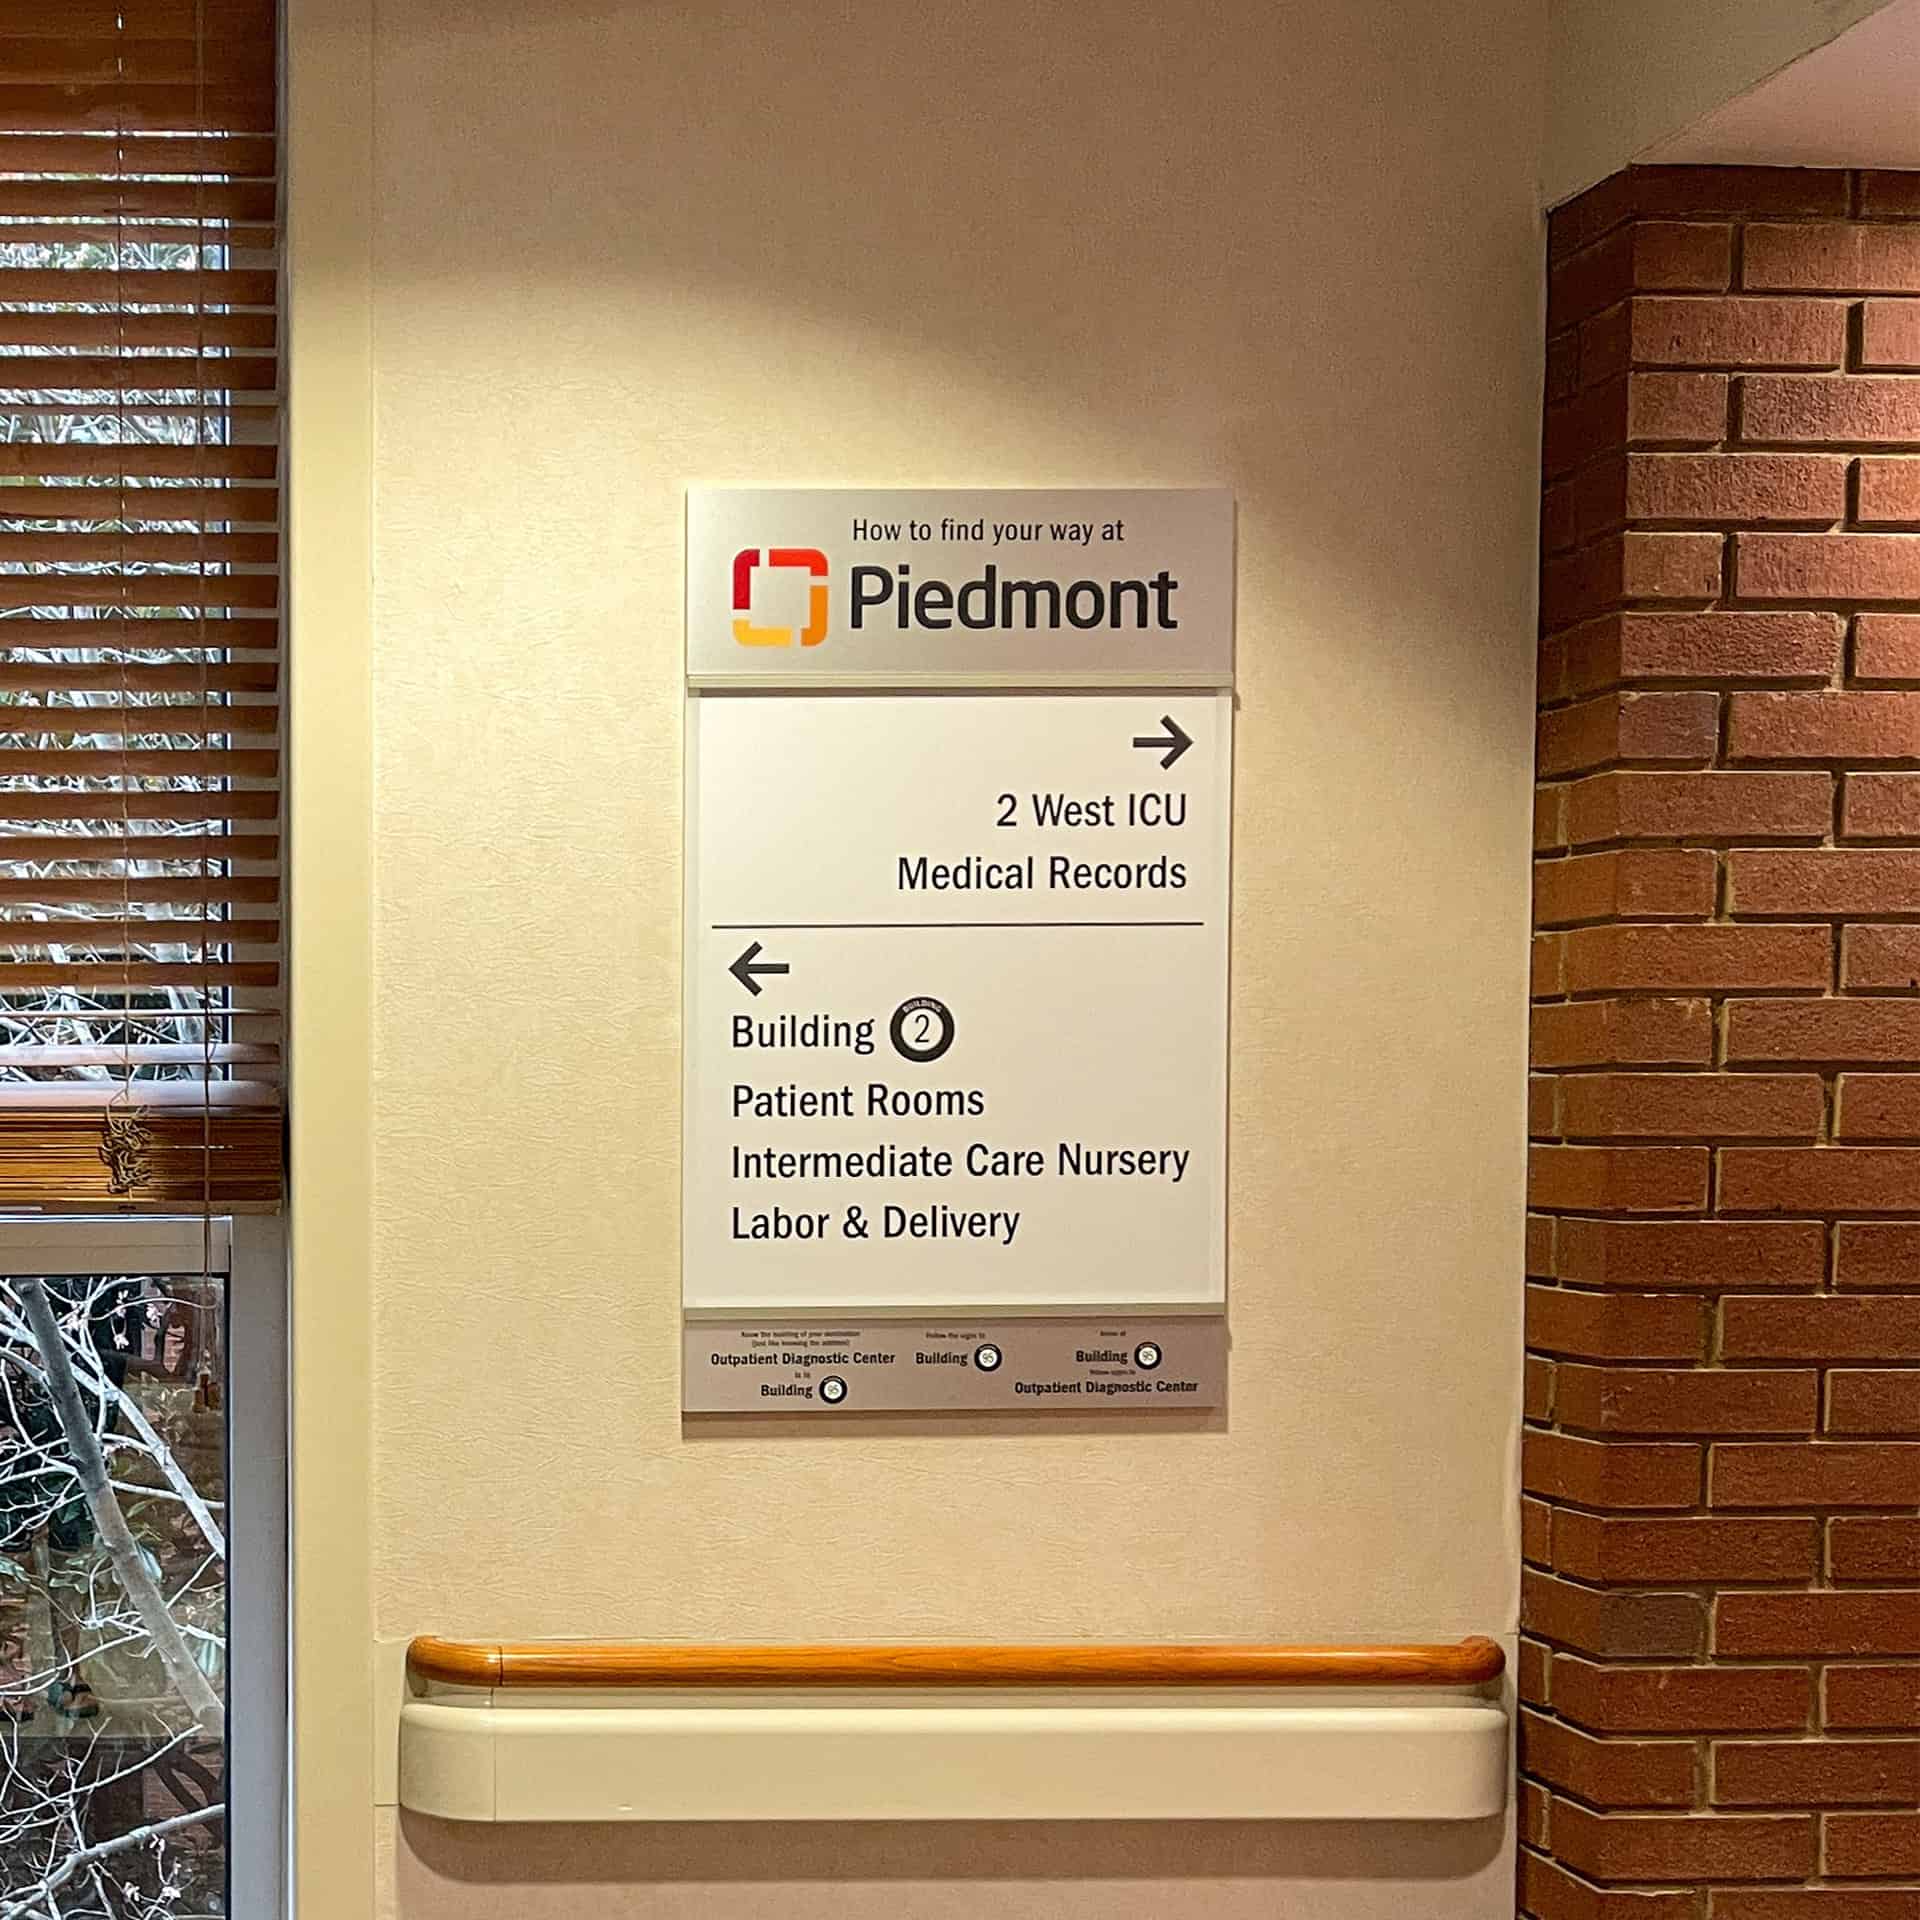 A sign in a hospital lobby.